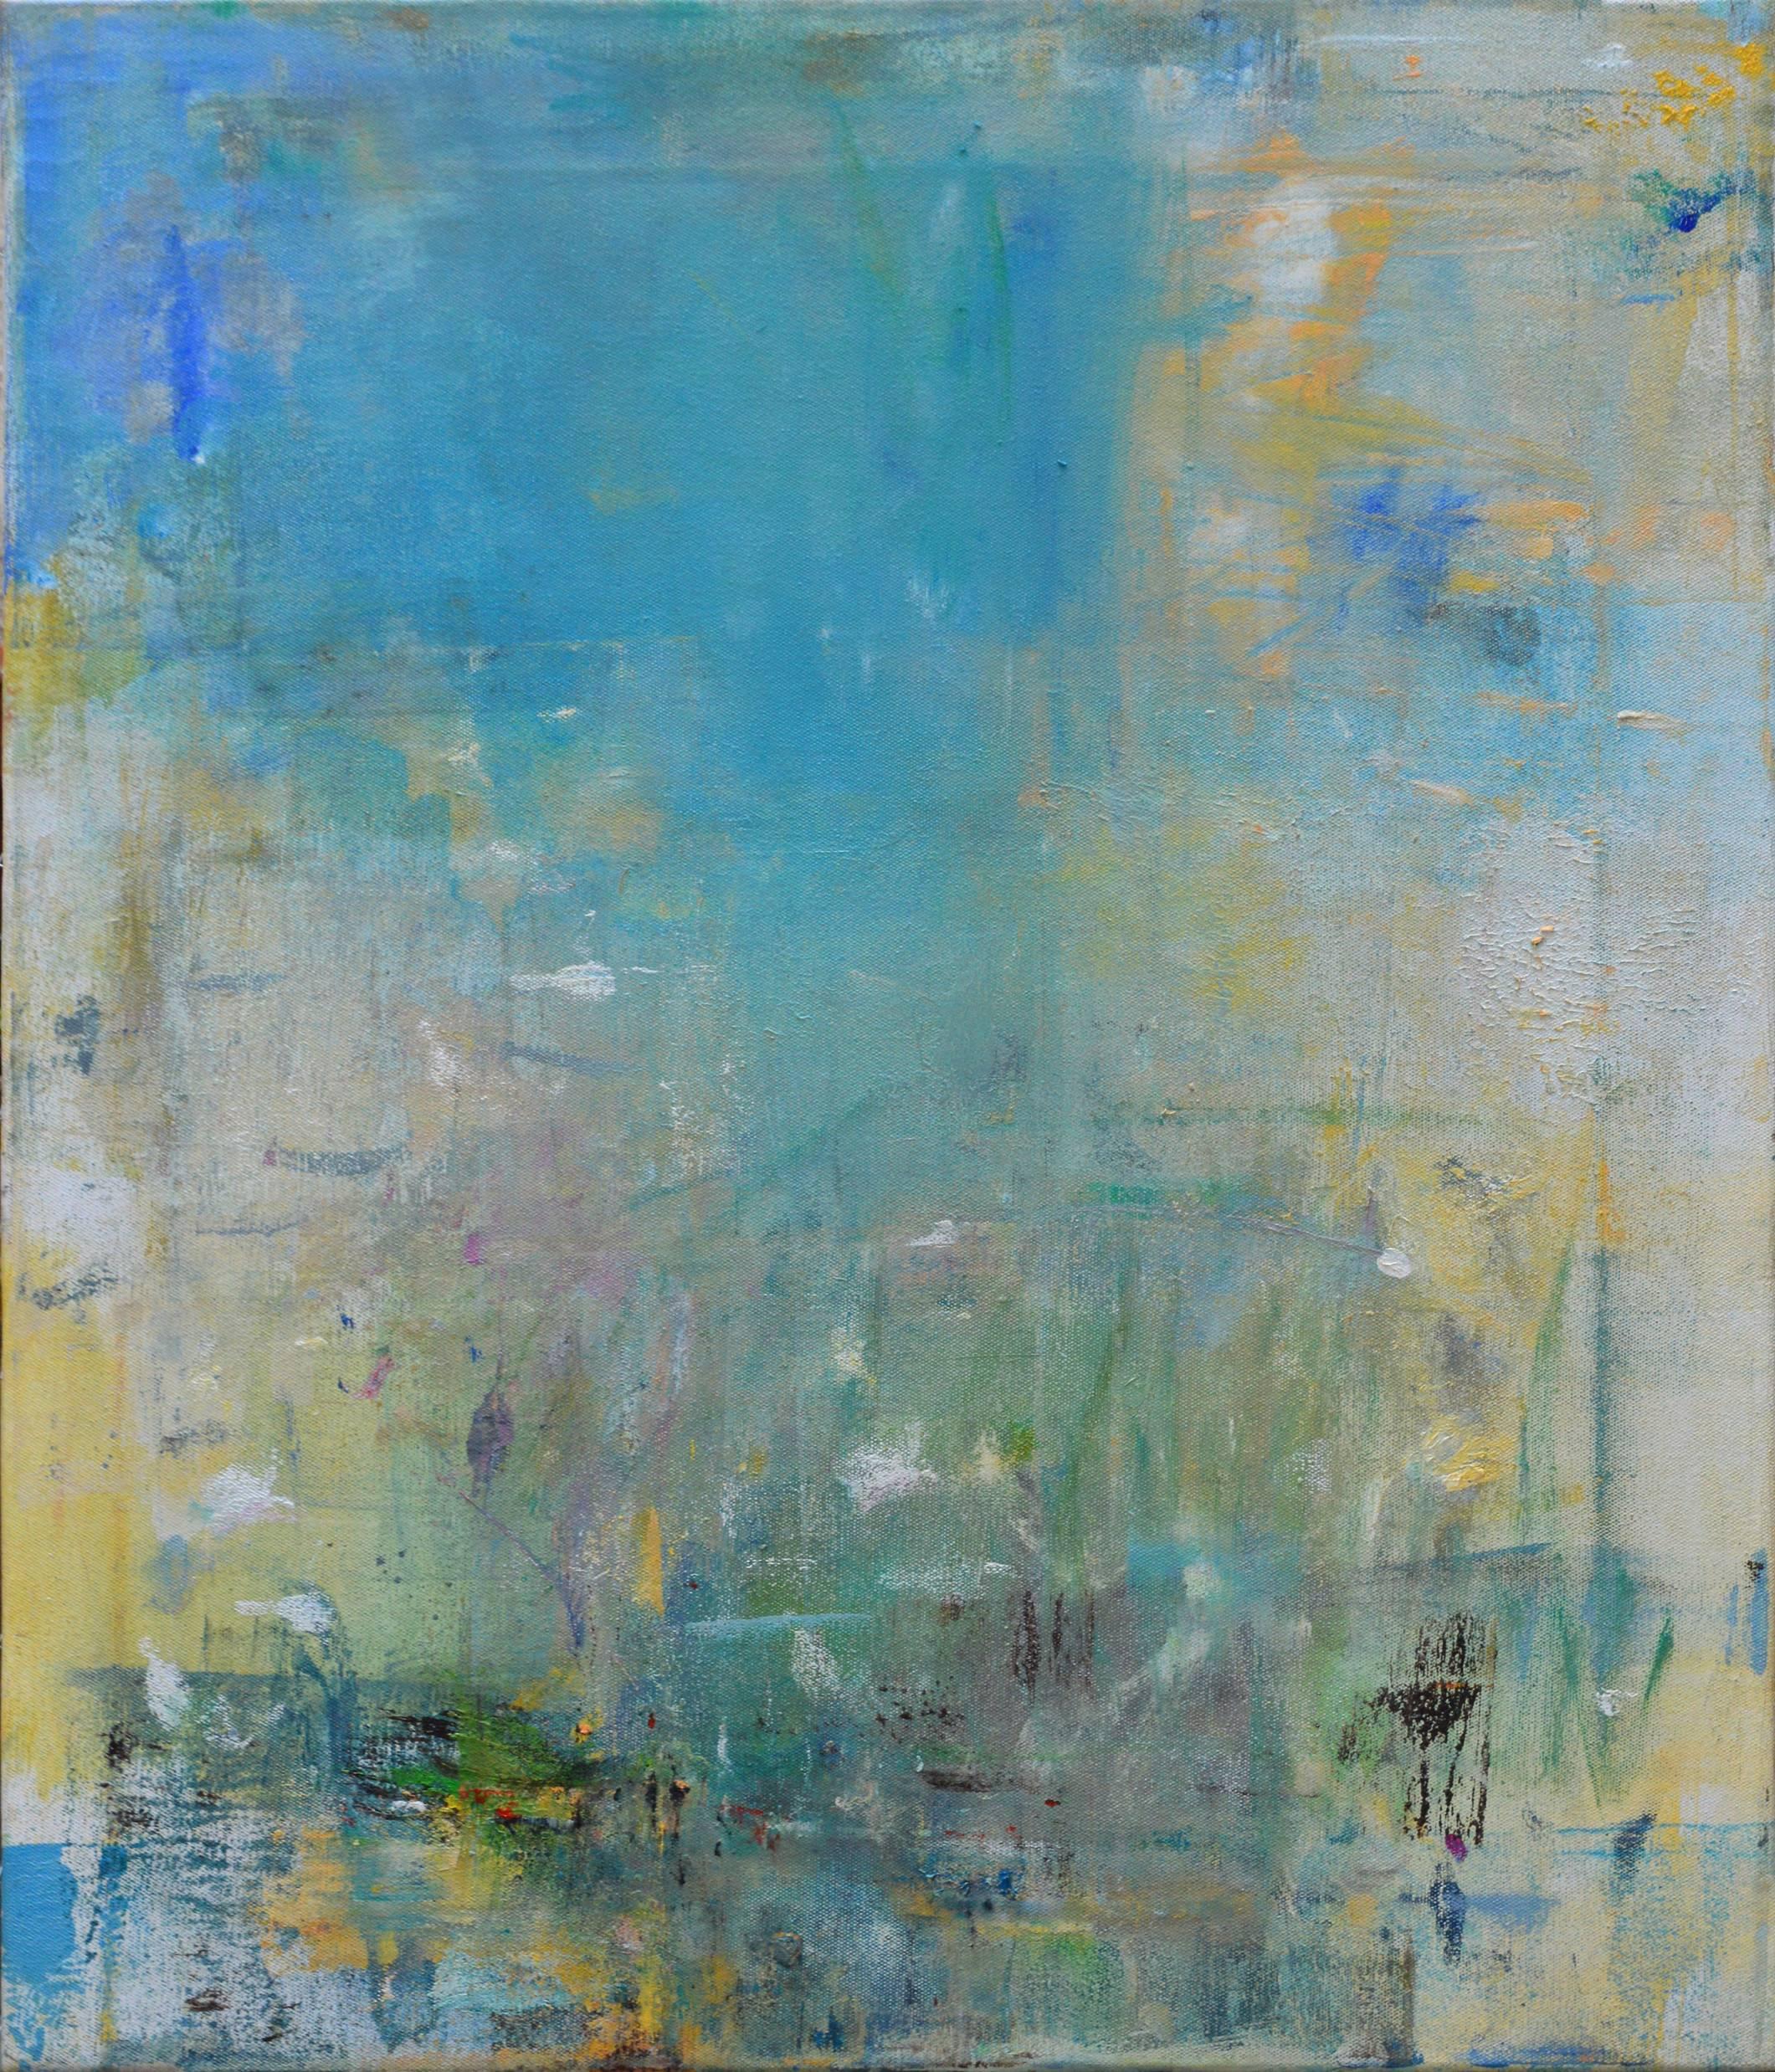 Gloria Sáez Abstract Painting - Gloria Saez, "In the Lake - En el Lago", Oil on canvas, 2017